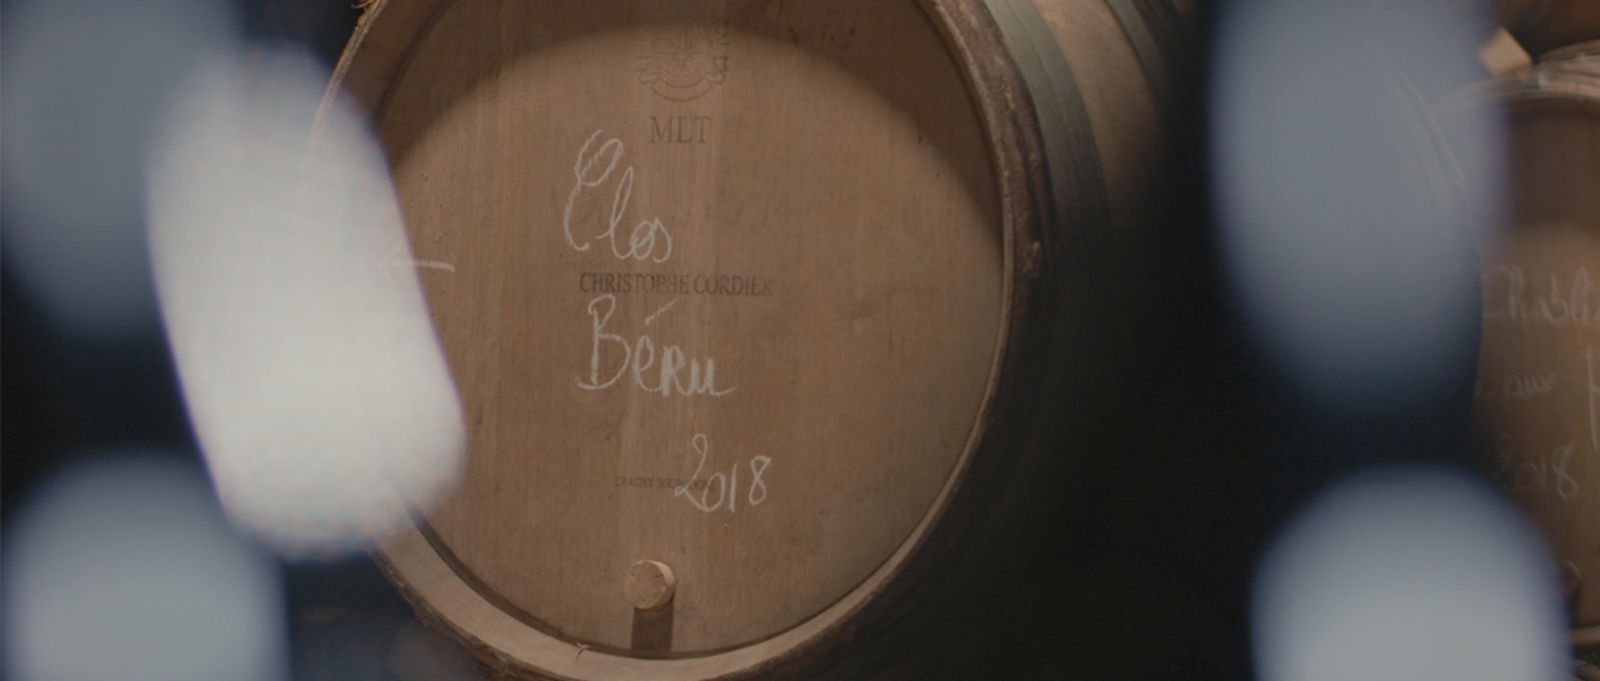 Wine of the Chateau de Béru